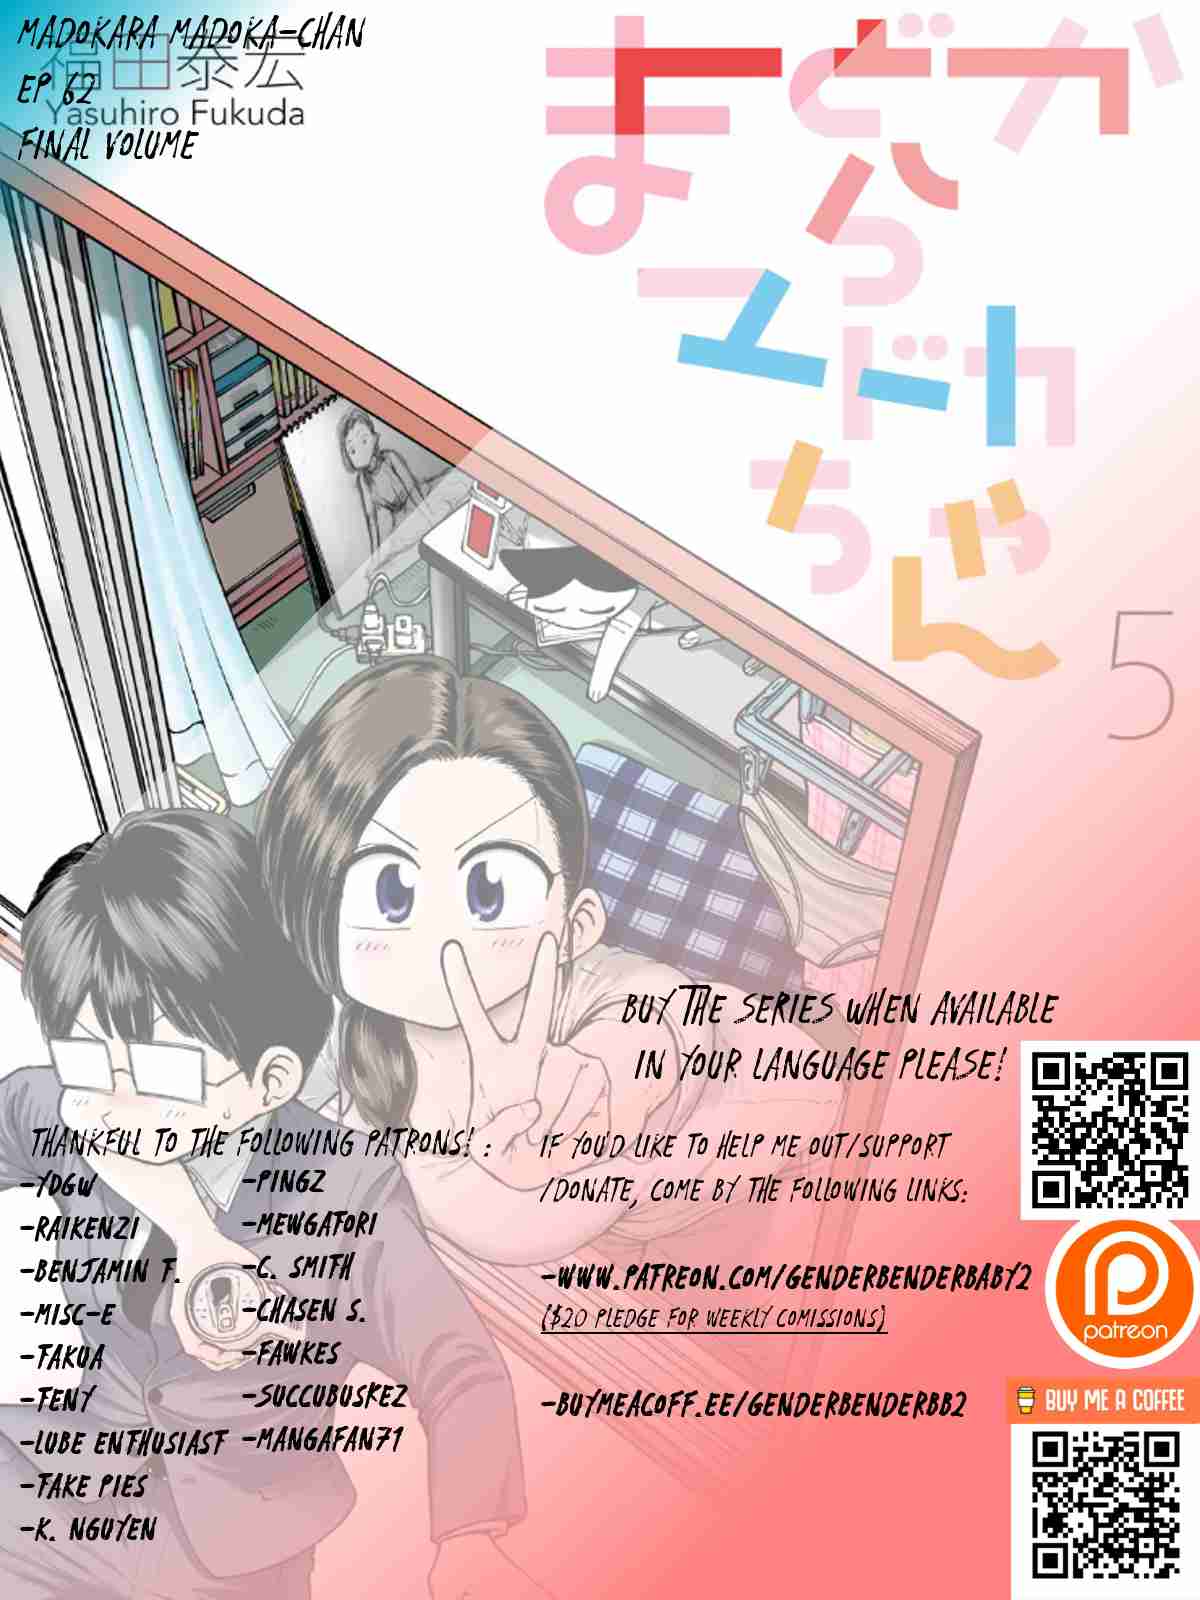 Mado Kara Madoka chan Vol. 5 Ch. 62 Madoka chan's Head Spa